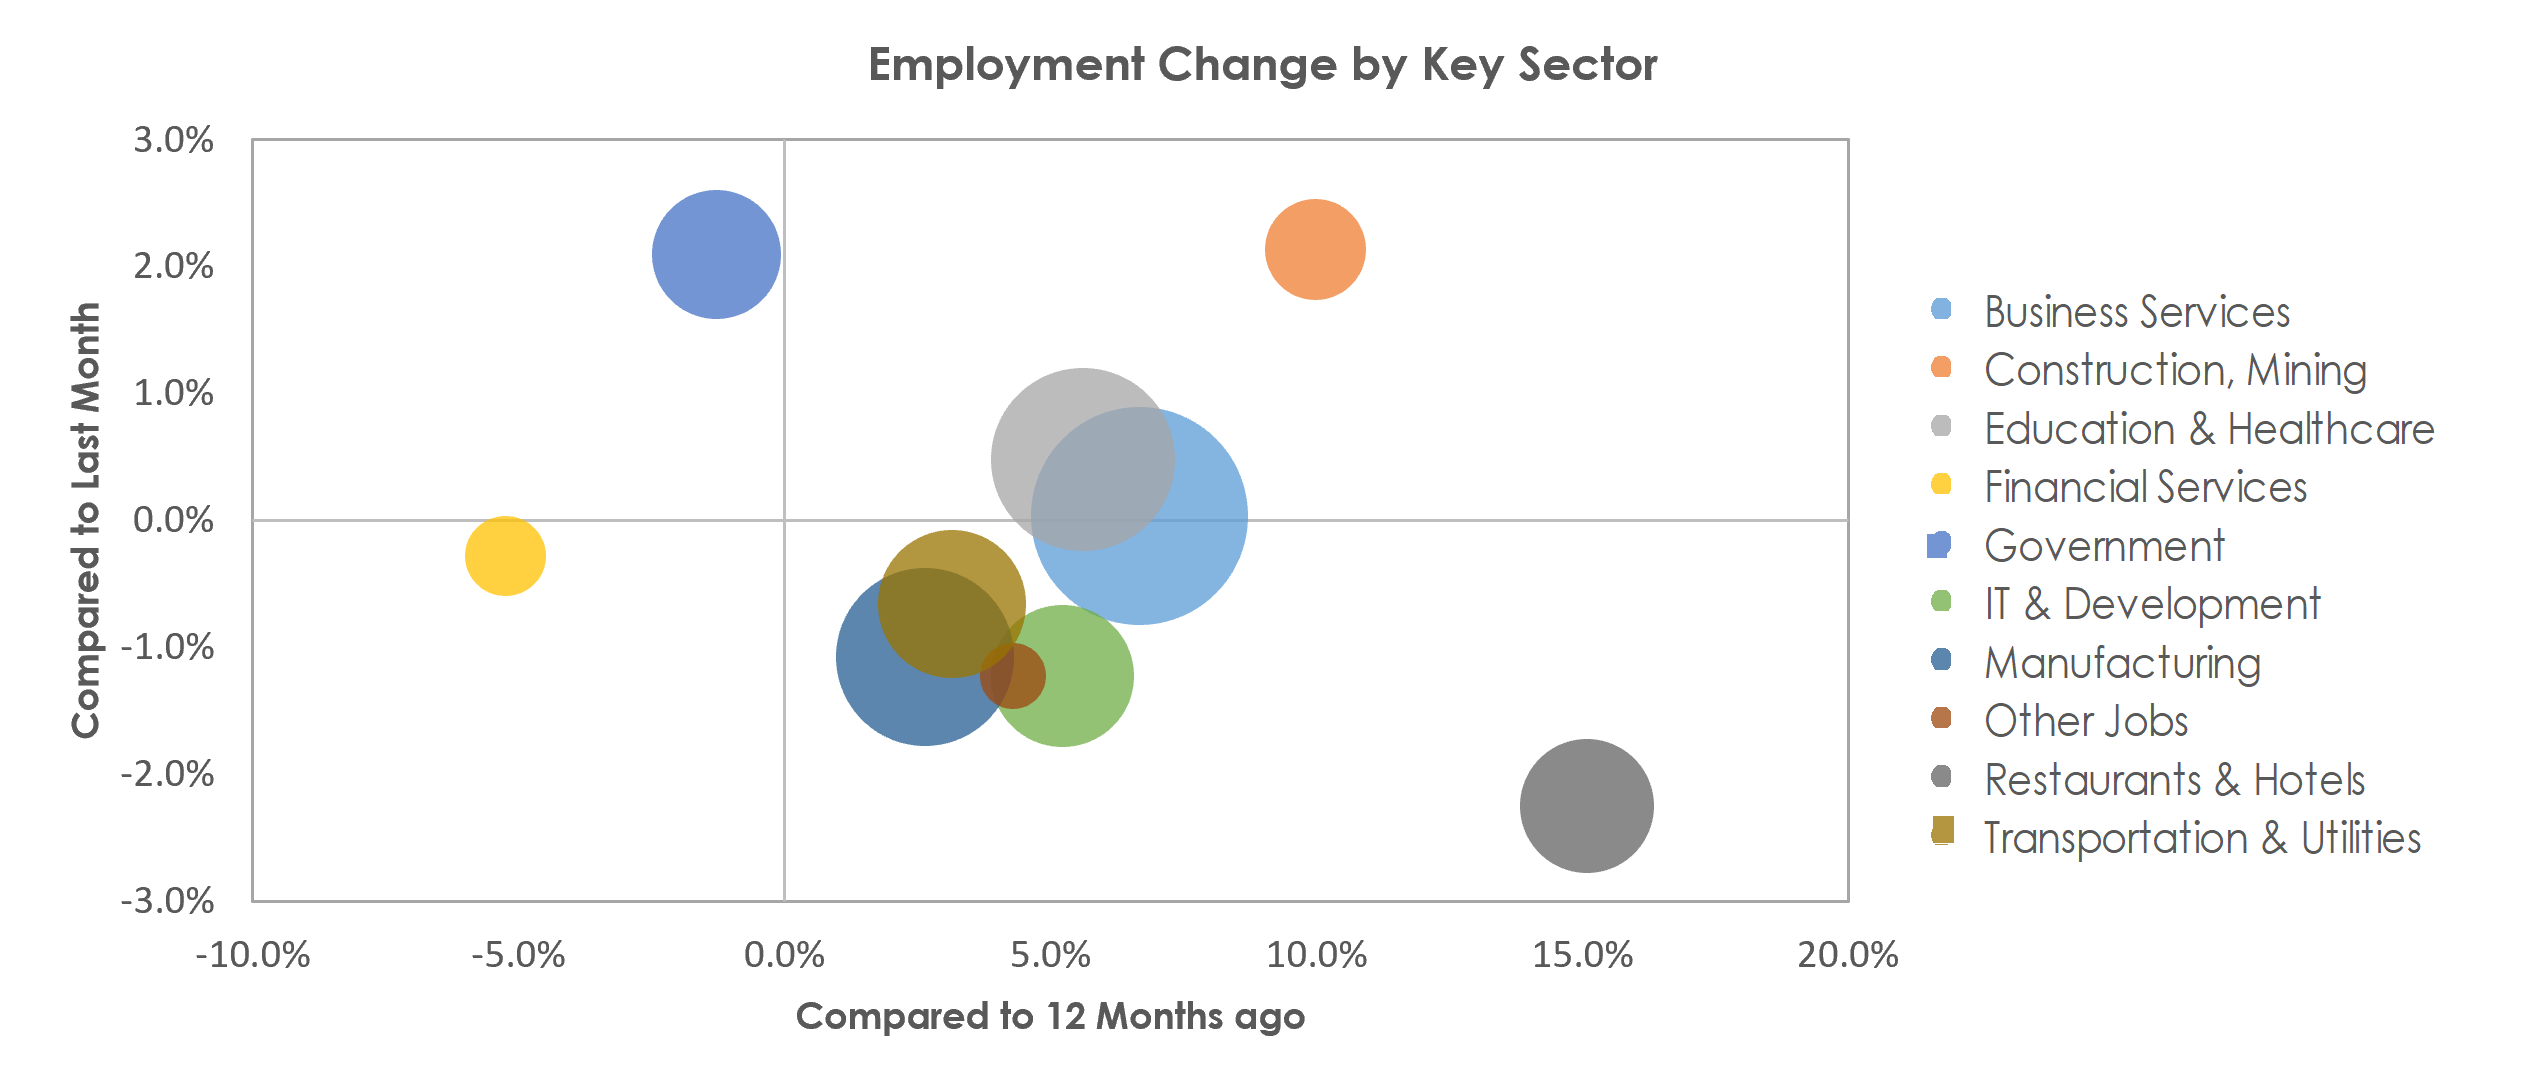 San Jose-Sunnyvale-Santa Clara, CA Unemployment by Industry September 2022